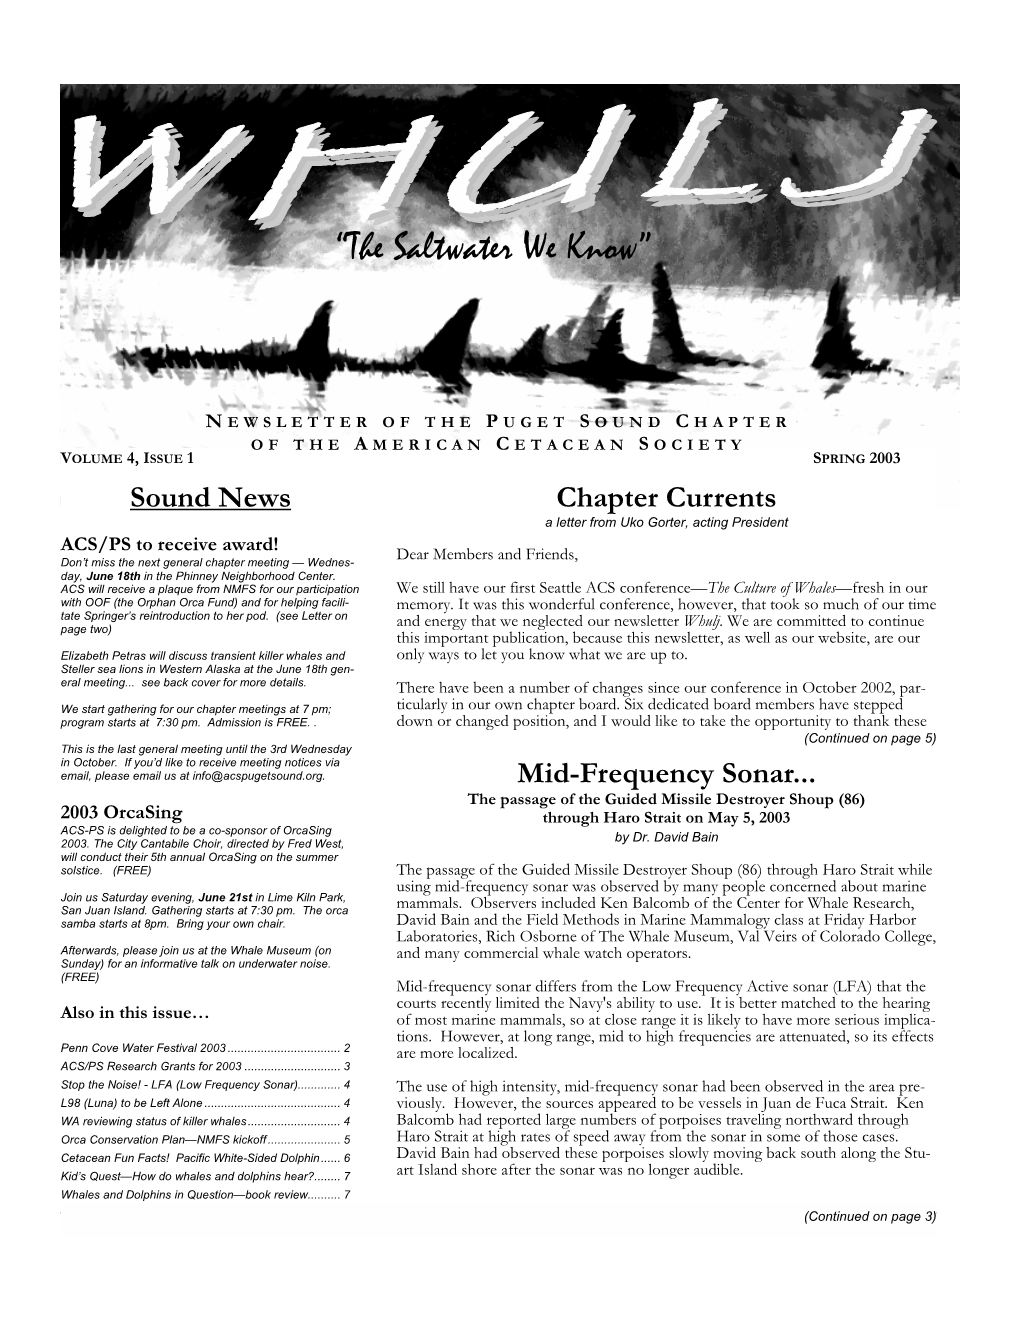 Spring 2003 Vol. 4, Issue 1